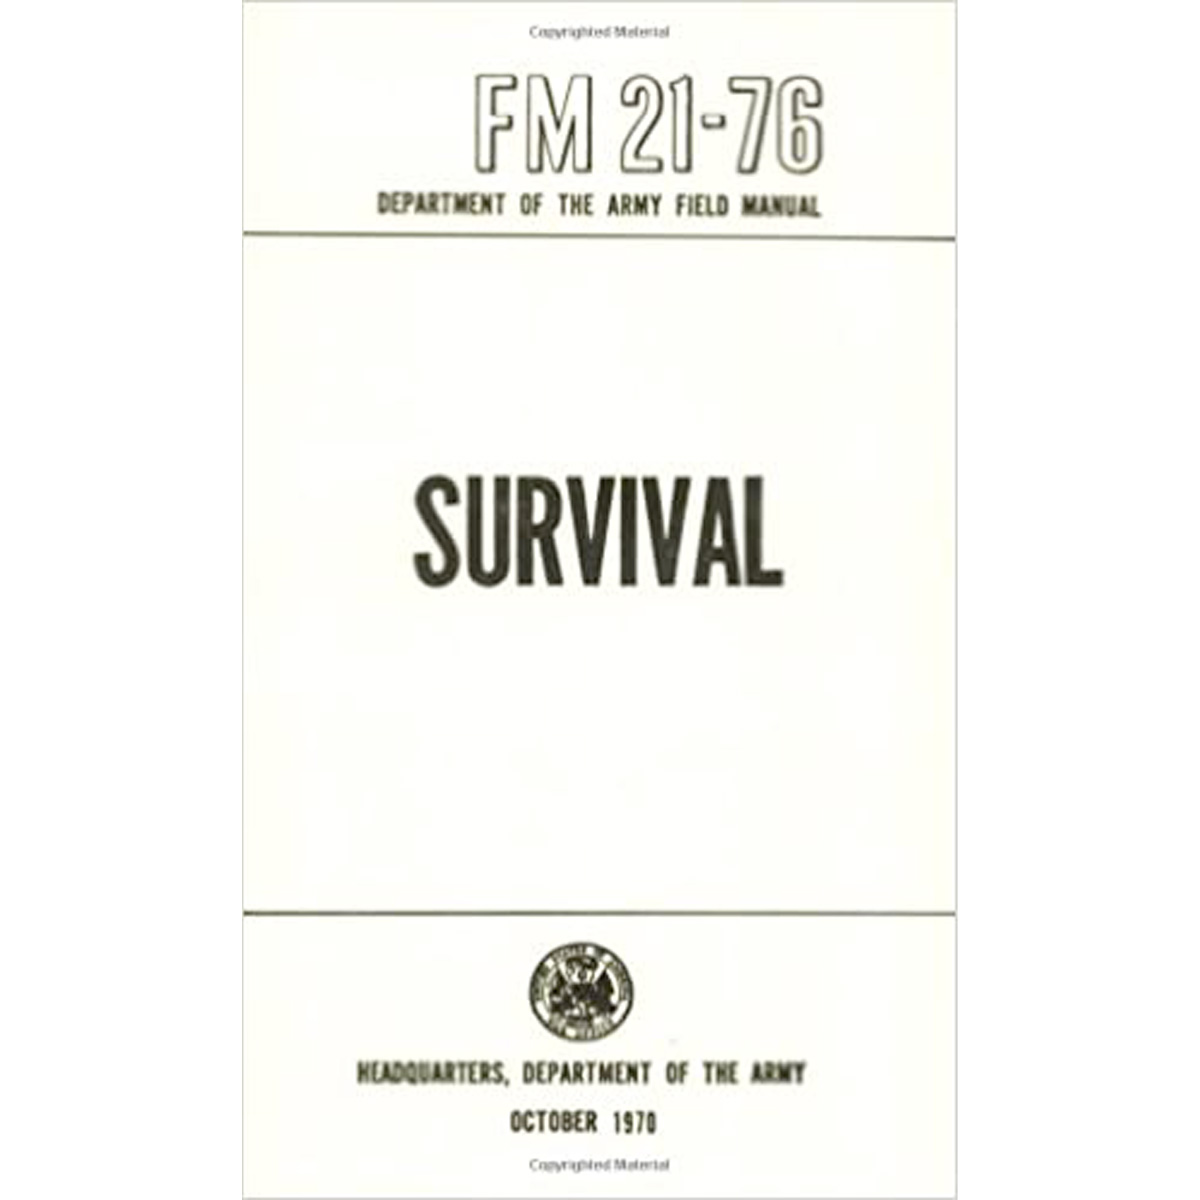 US Army Survival Manual: FM 21-76 (1970 Edition)